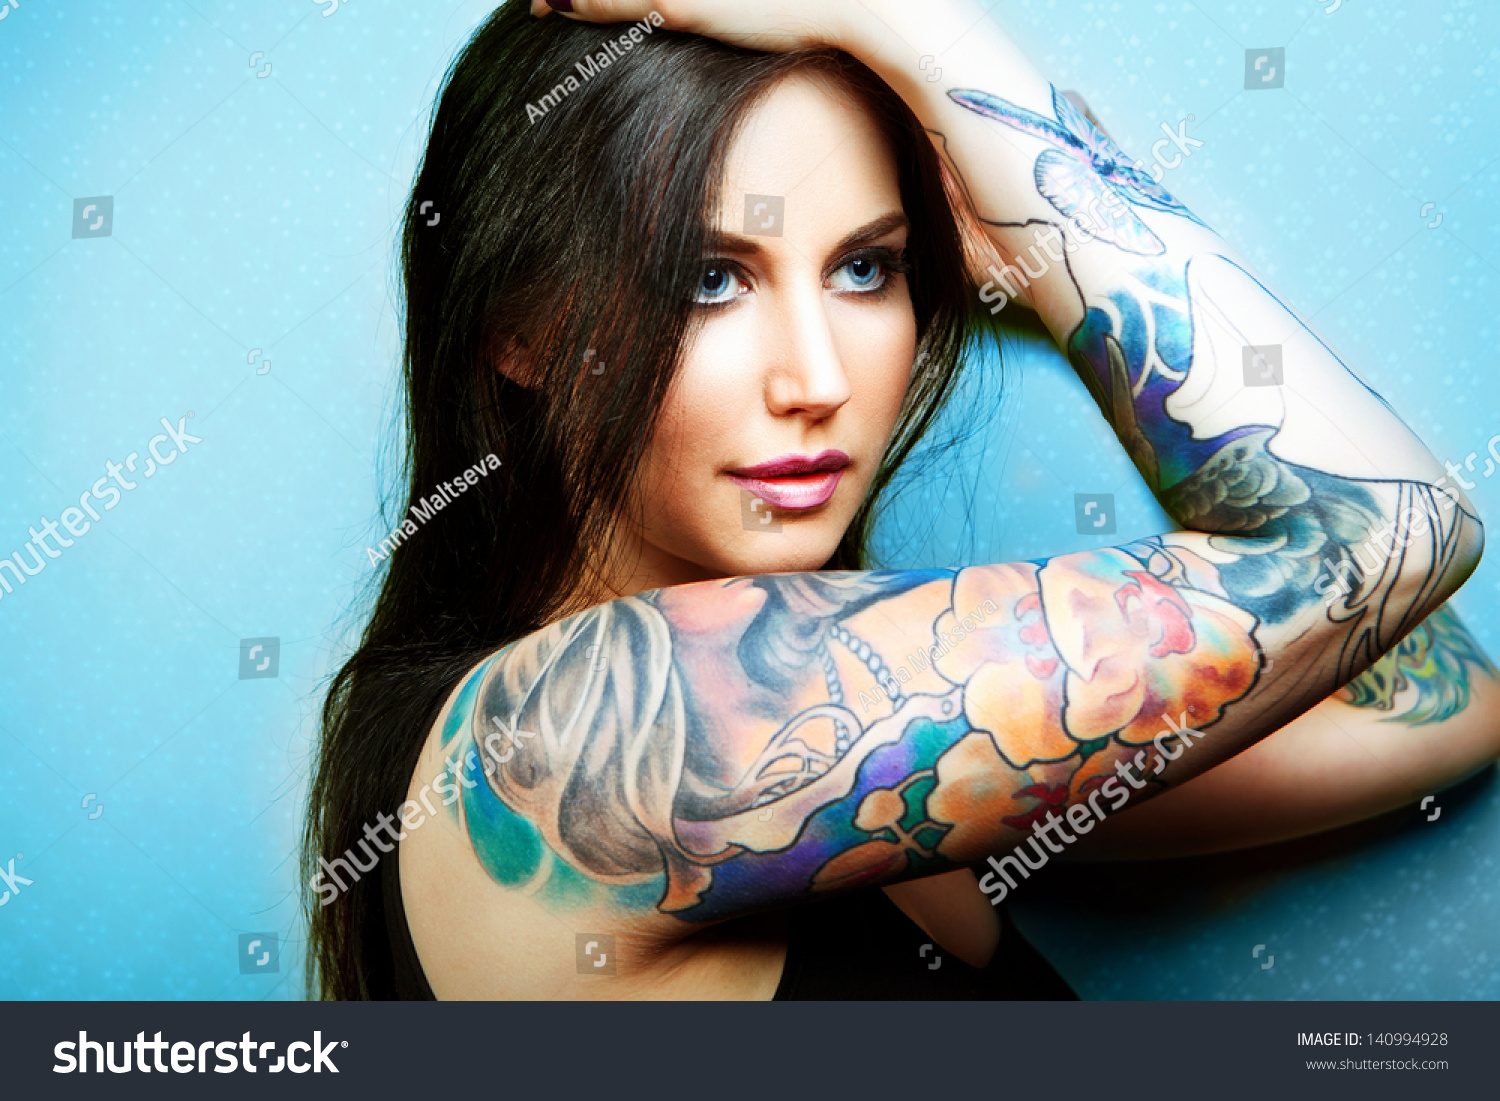 Beautiful Girl With Stylish Make Up And Tattooed Arms Tattoo Stock